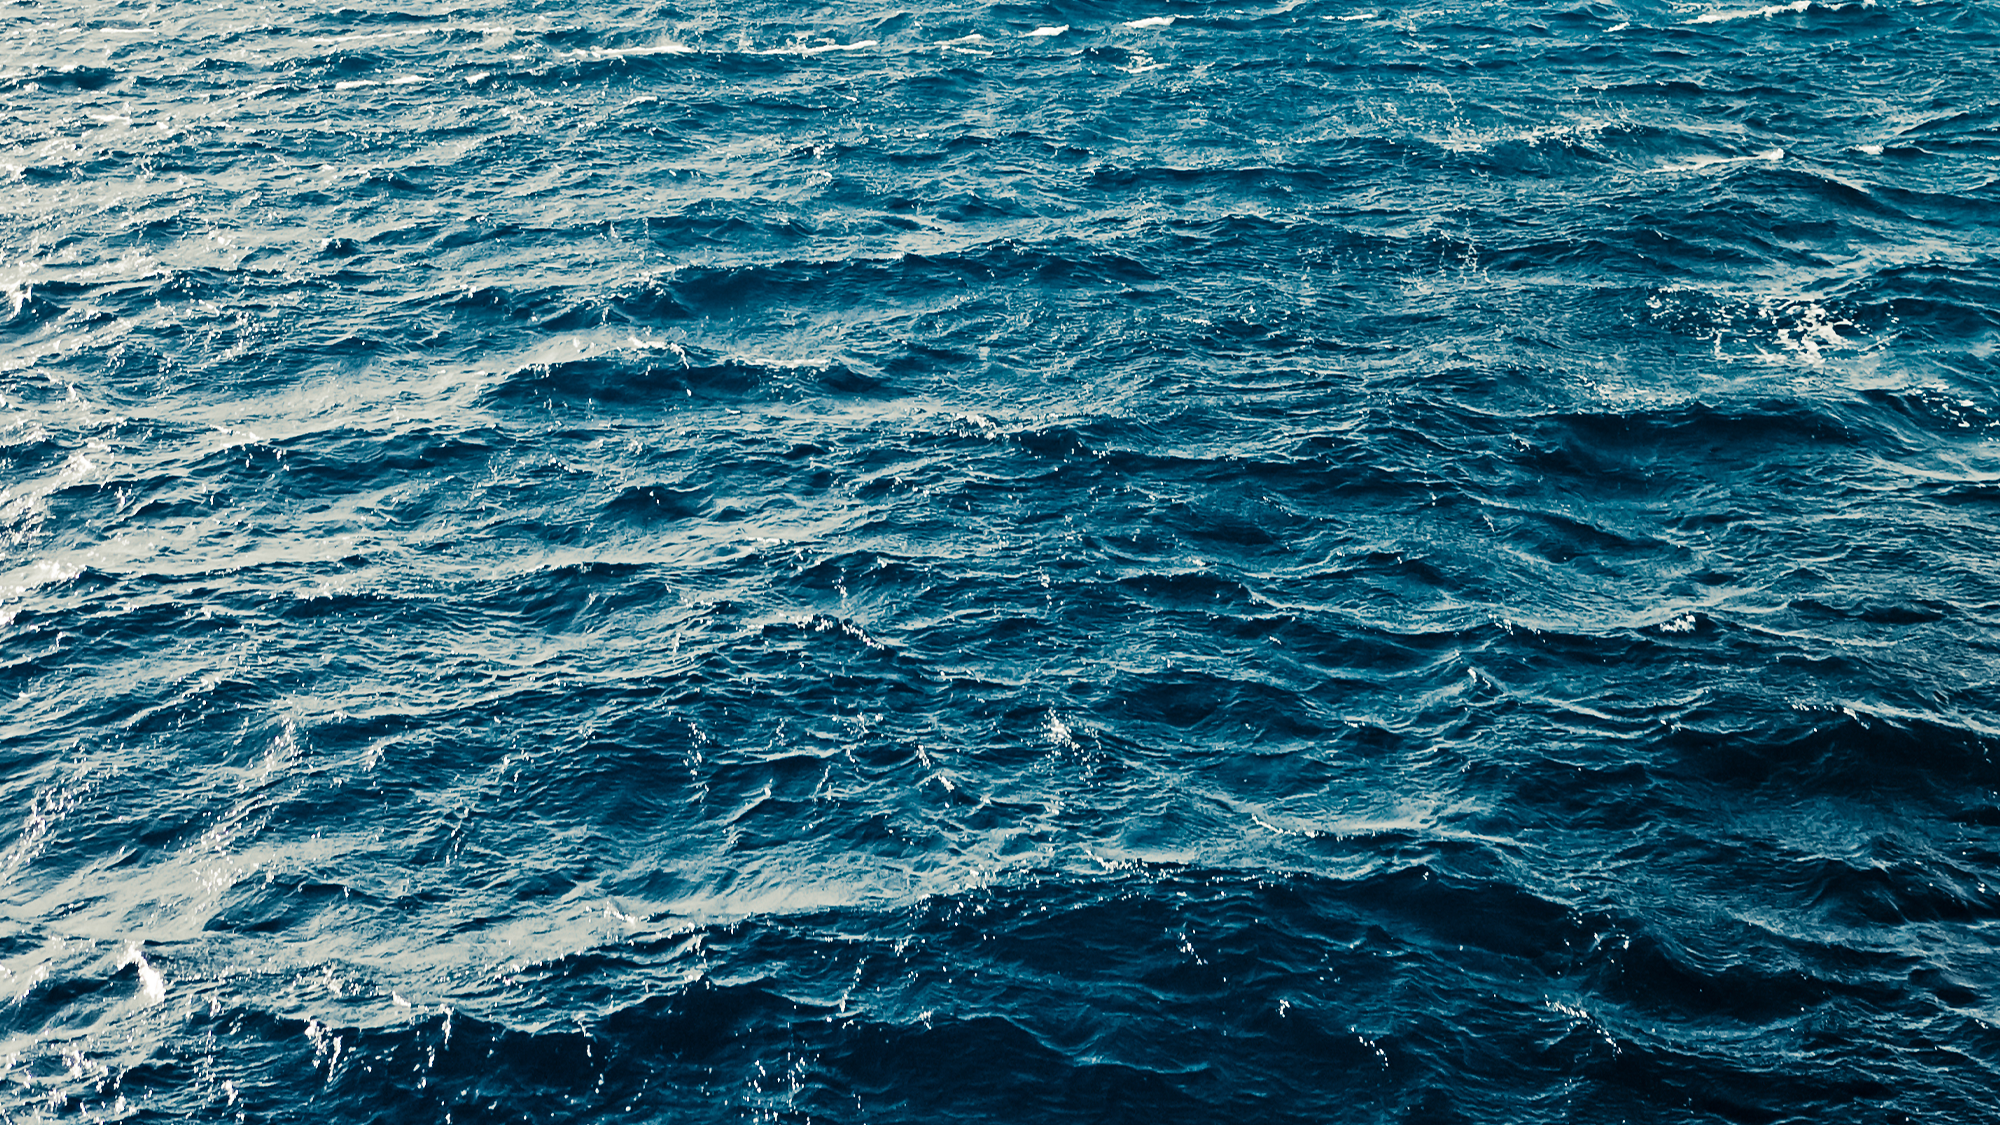 Waves on the ocean.